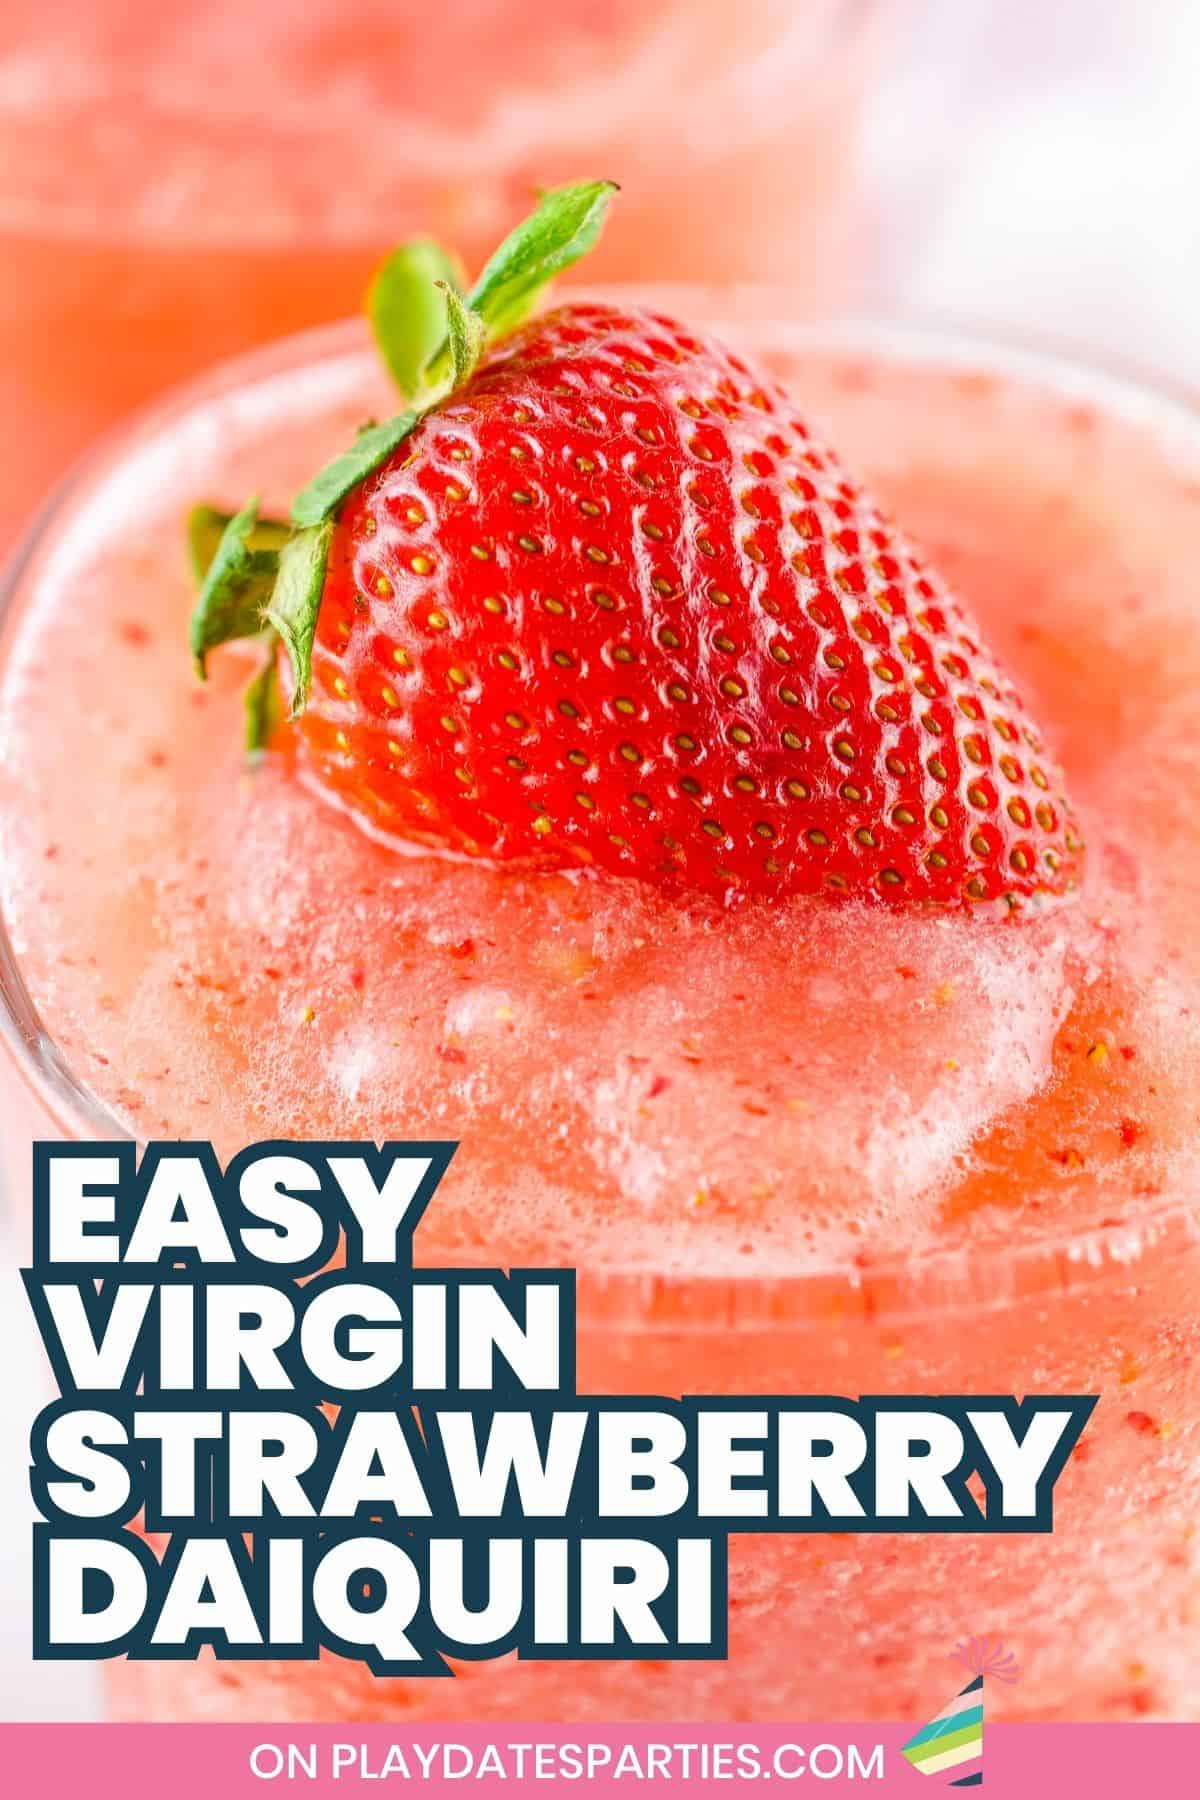 Virgin Strawberry Daiquiri pin image.